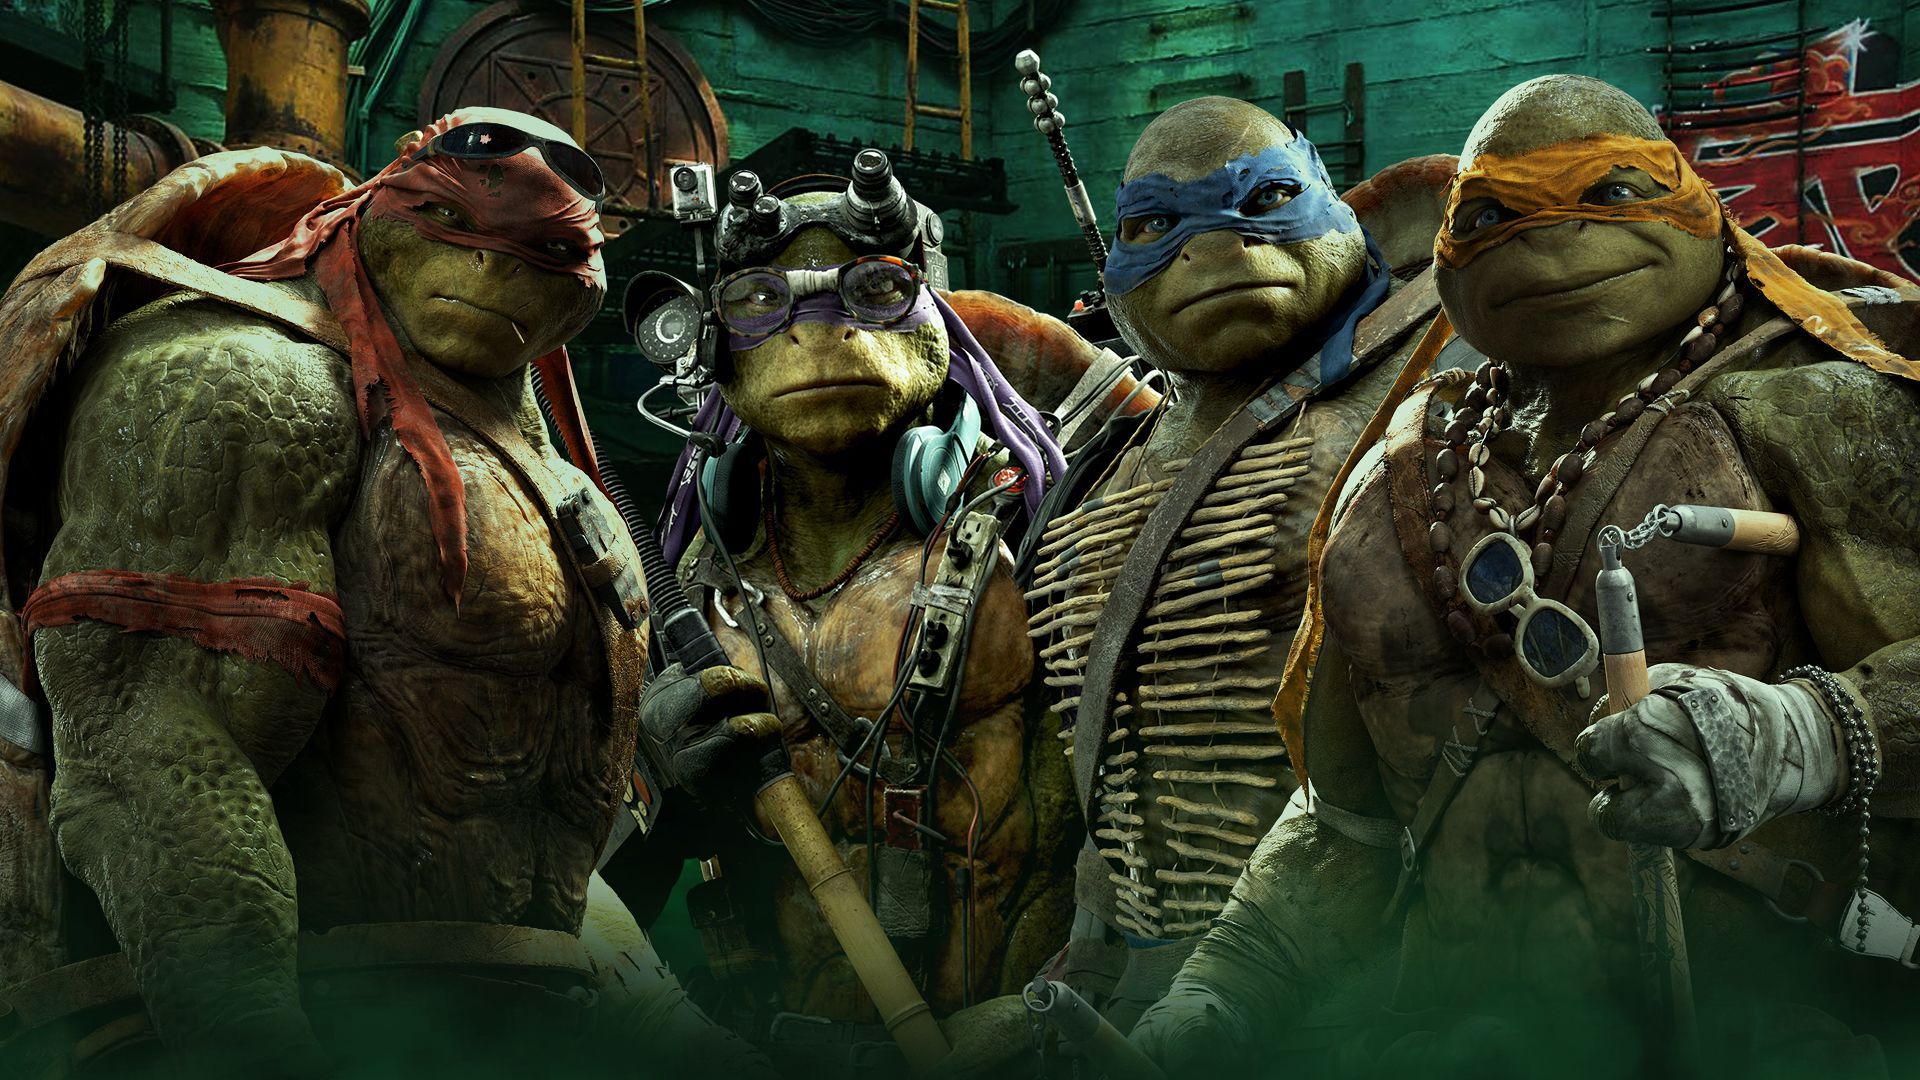 Teenage Mutant Ninja Turtles Movie HD Movies, 4k Wallpaper, Image, Background, Photo and Picture